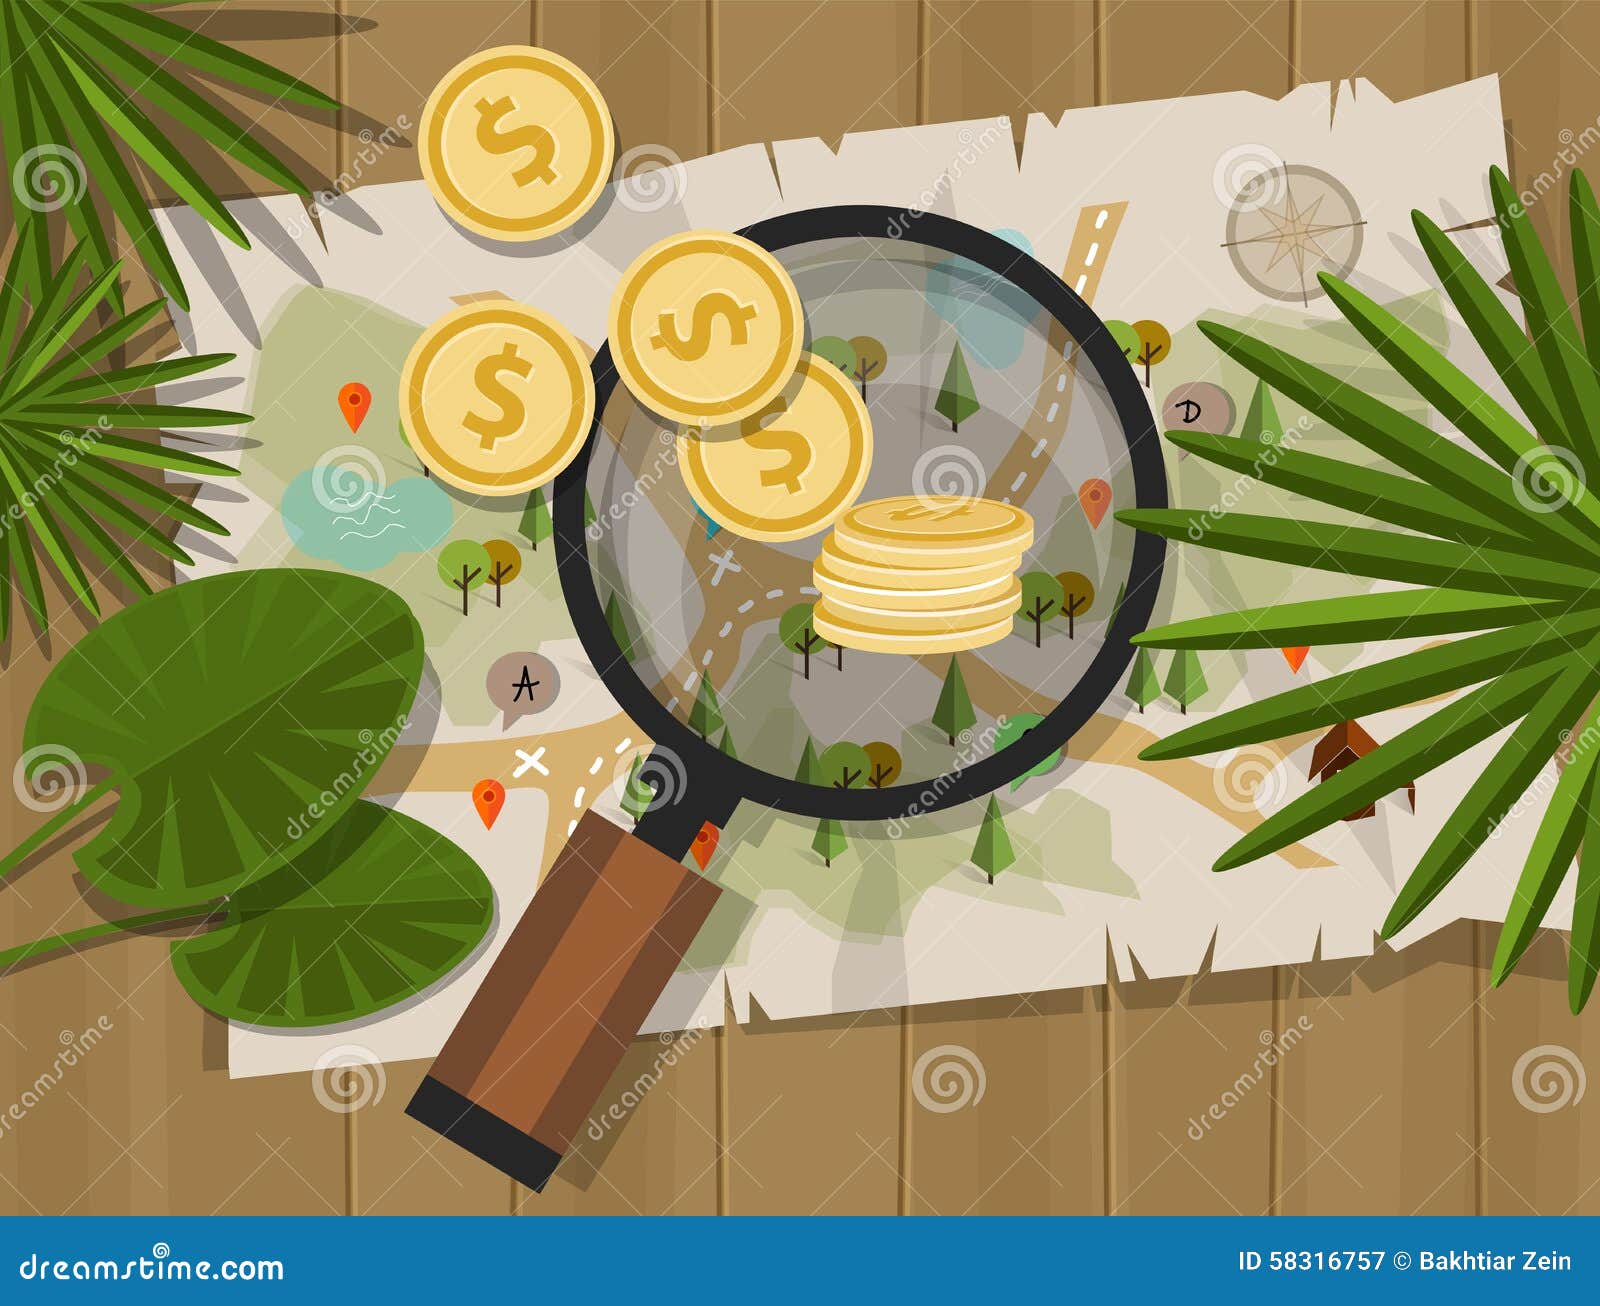 find treasure hunt money map